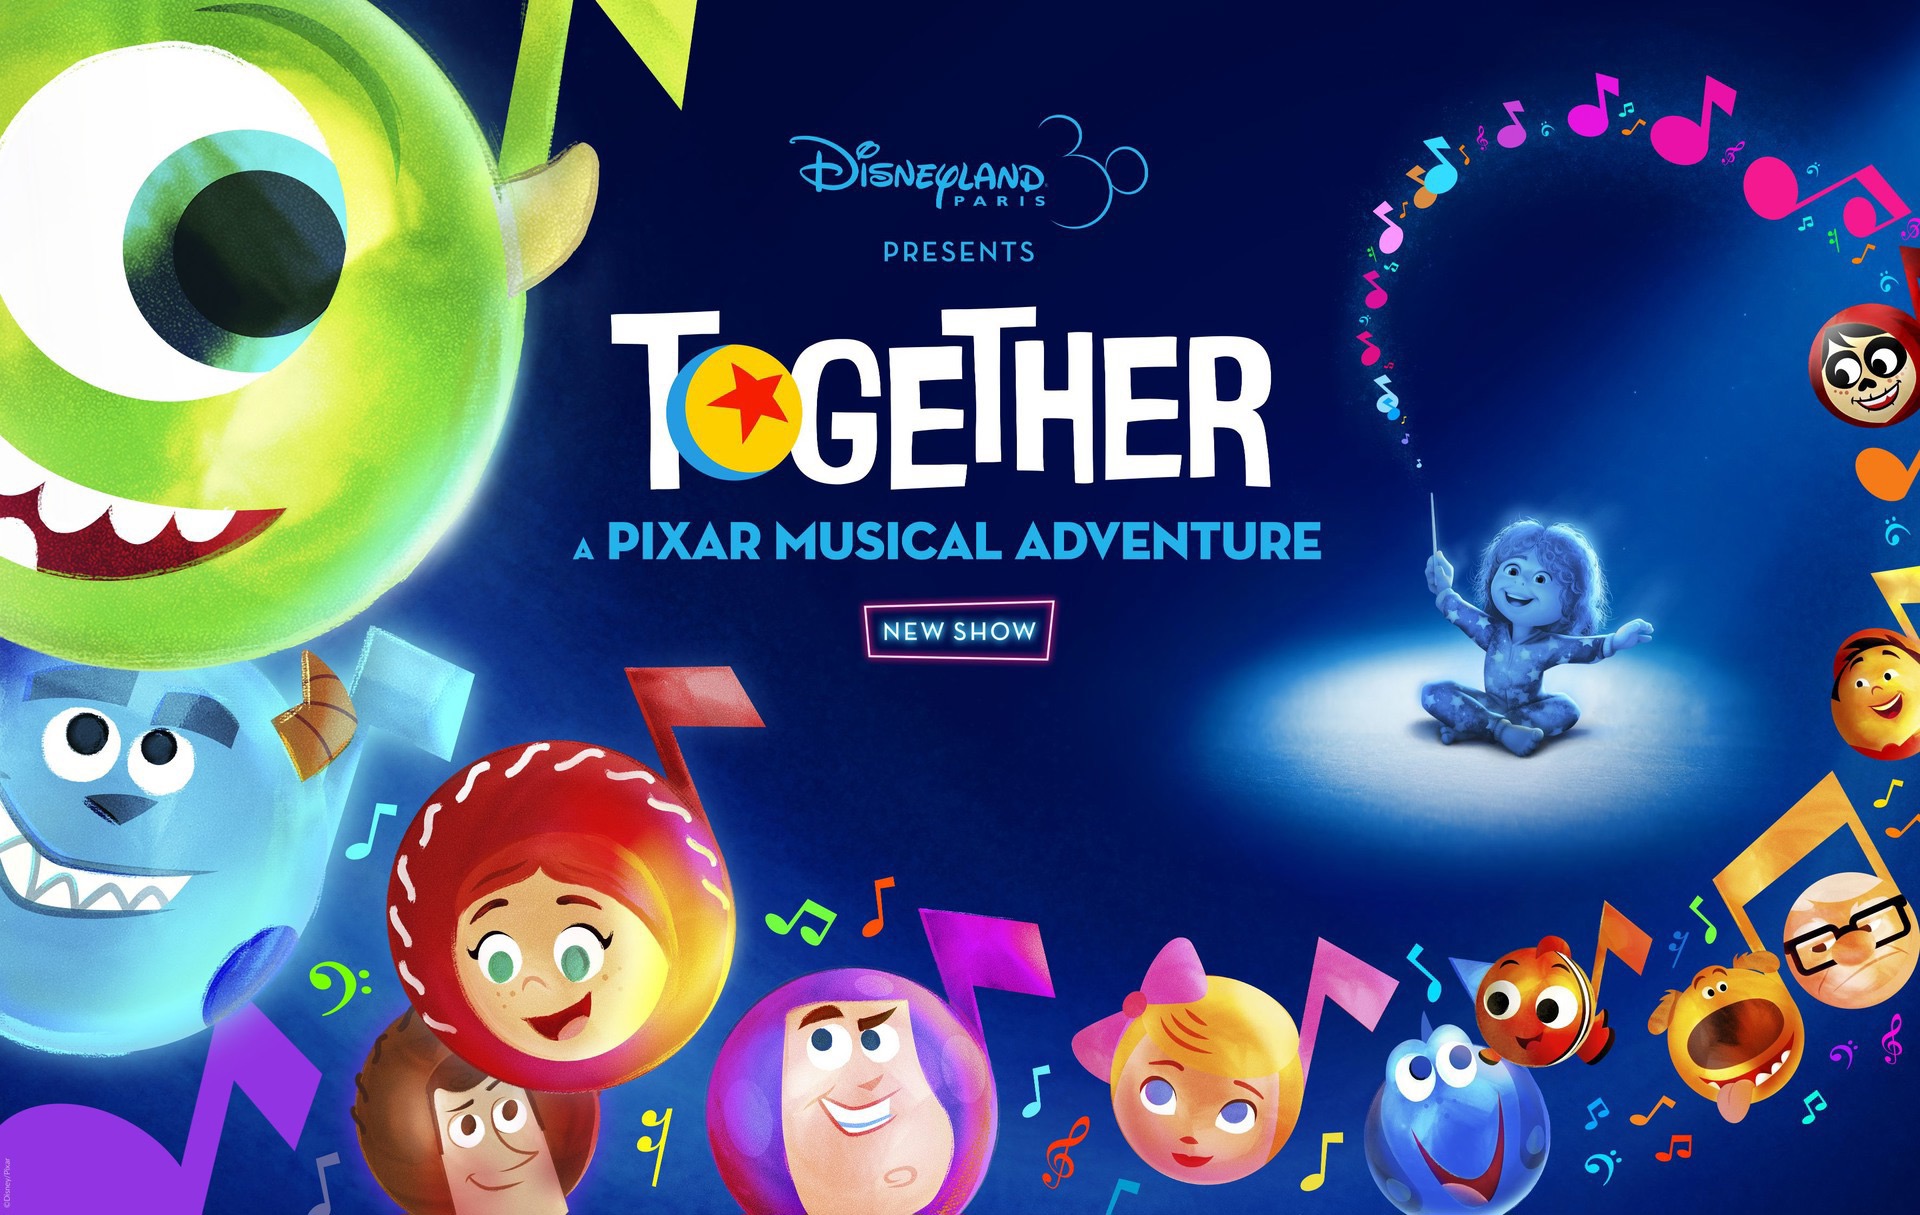 Pixar: A Musical Adventure Debuts on the 15th July at Disneyland Paris